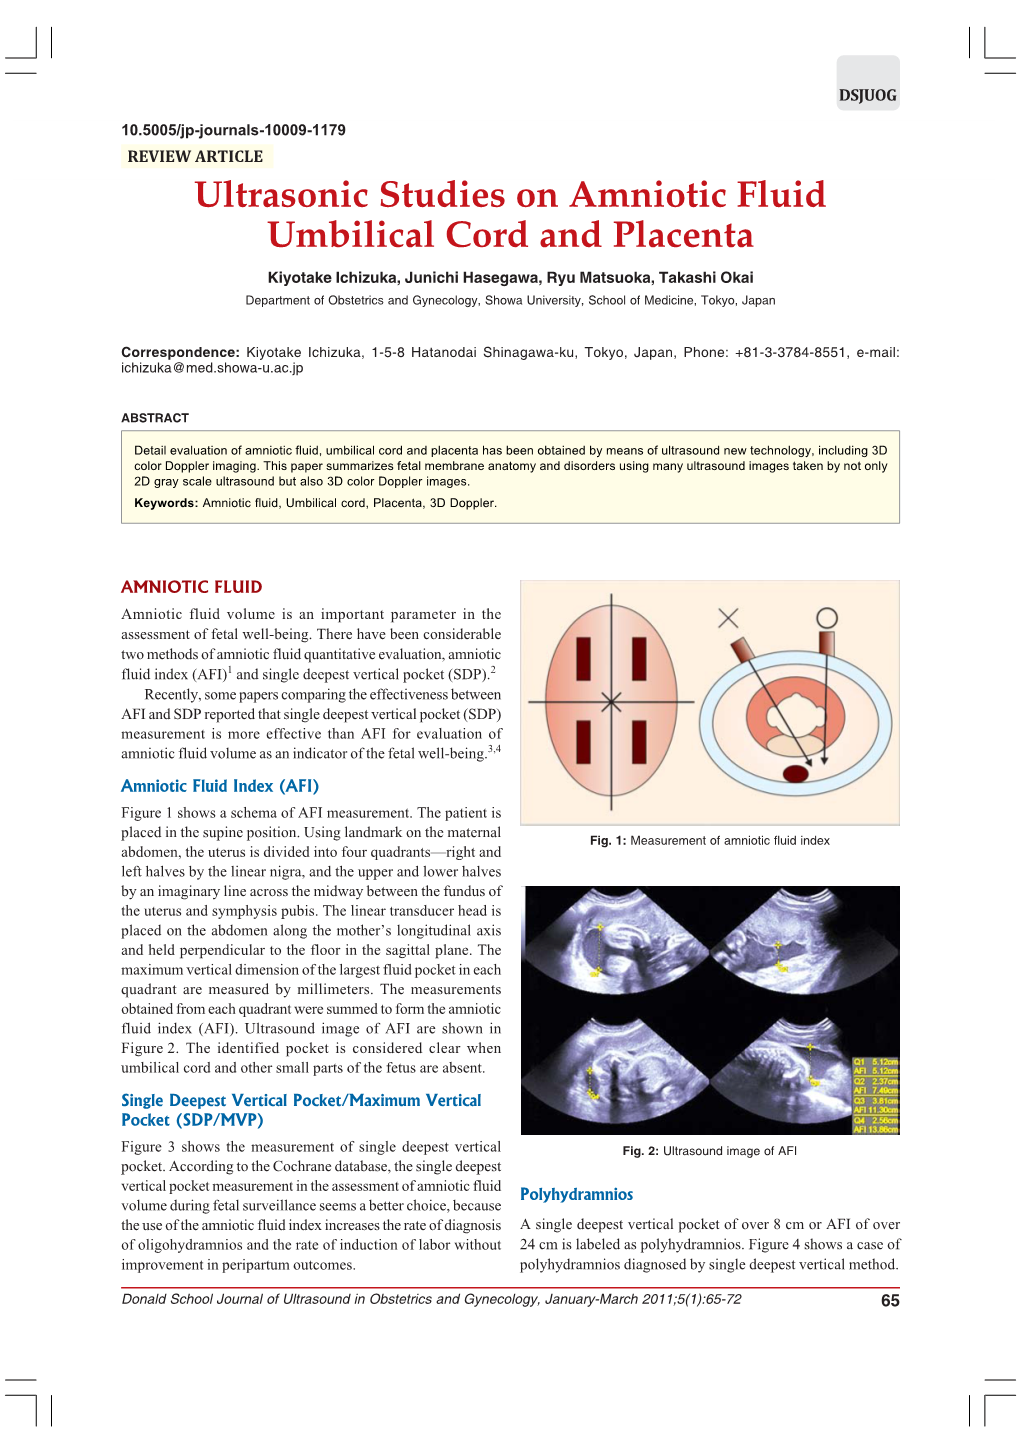 Ultrasonic Studies on Amniotic Fluid Umbilical Cord and Placenta